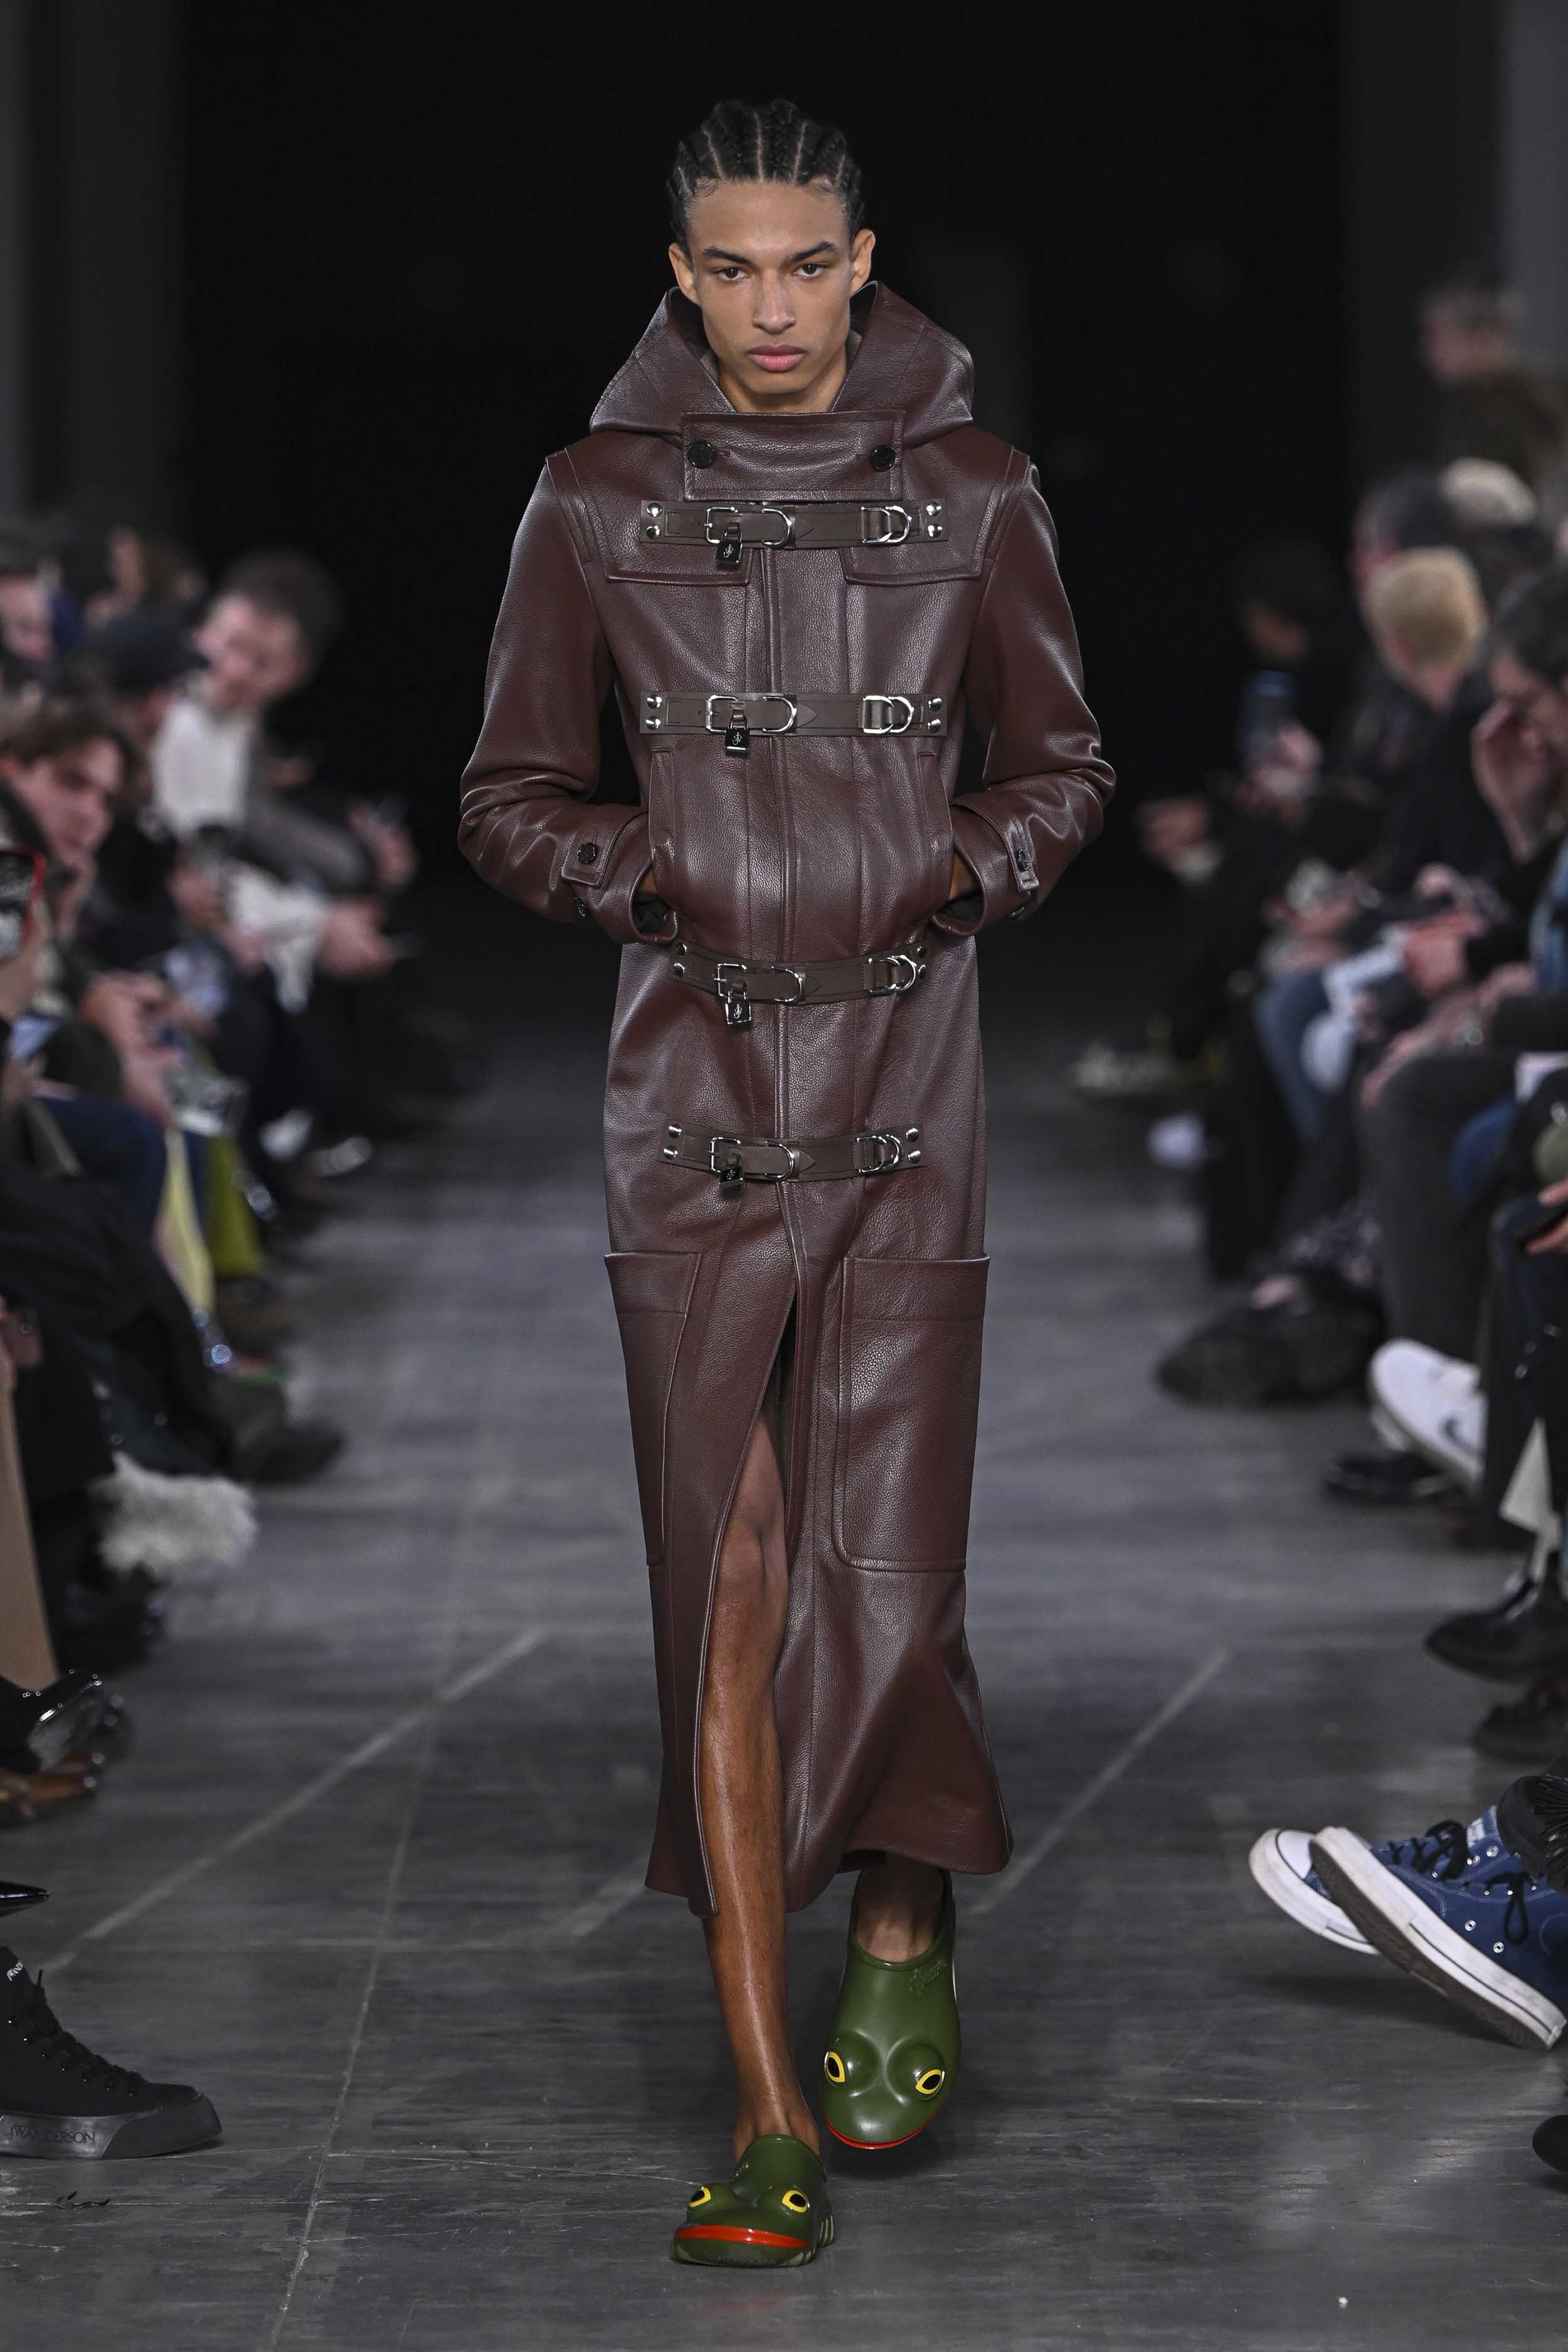 JW Anderson flaunts frog clogs at Milan Fashion Week